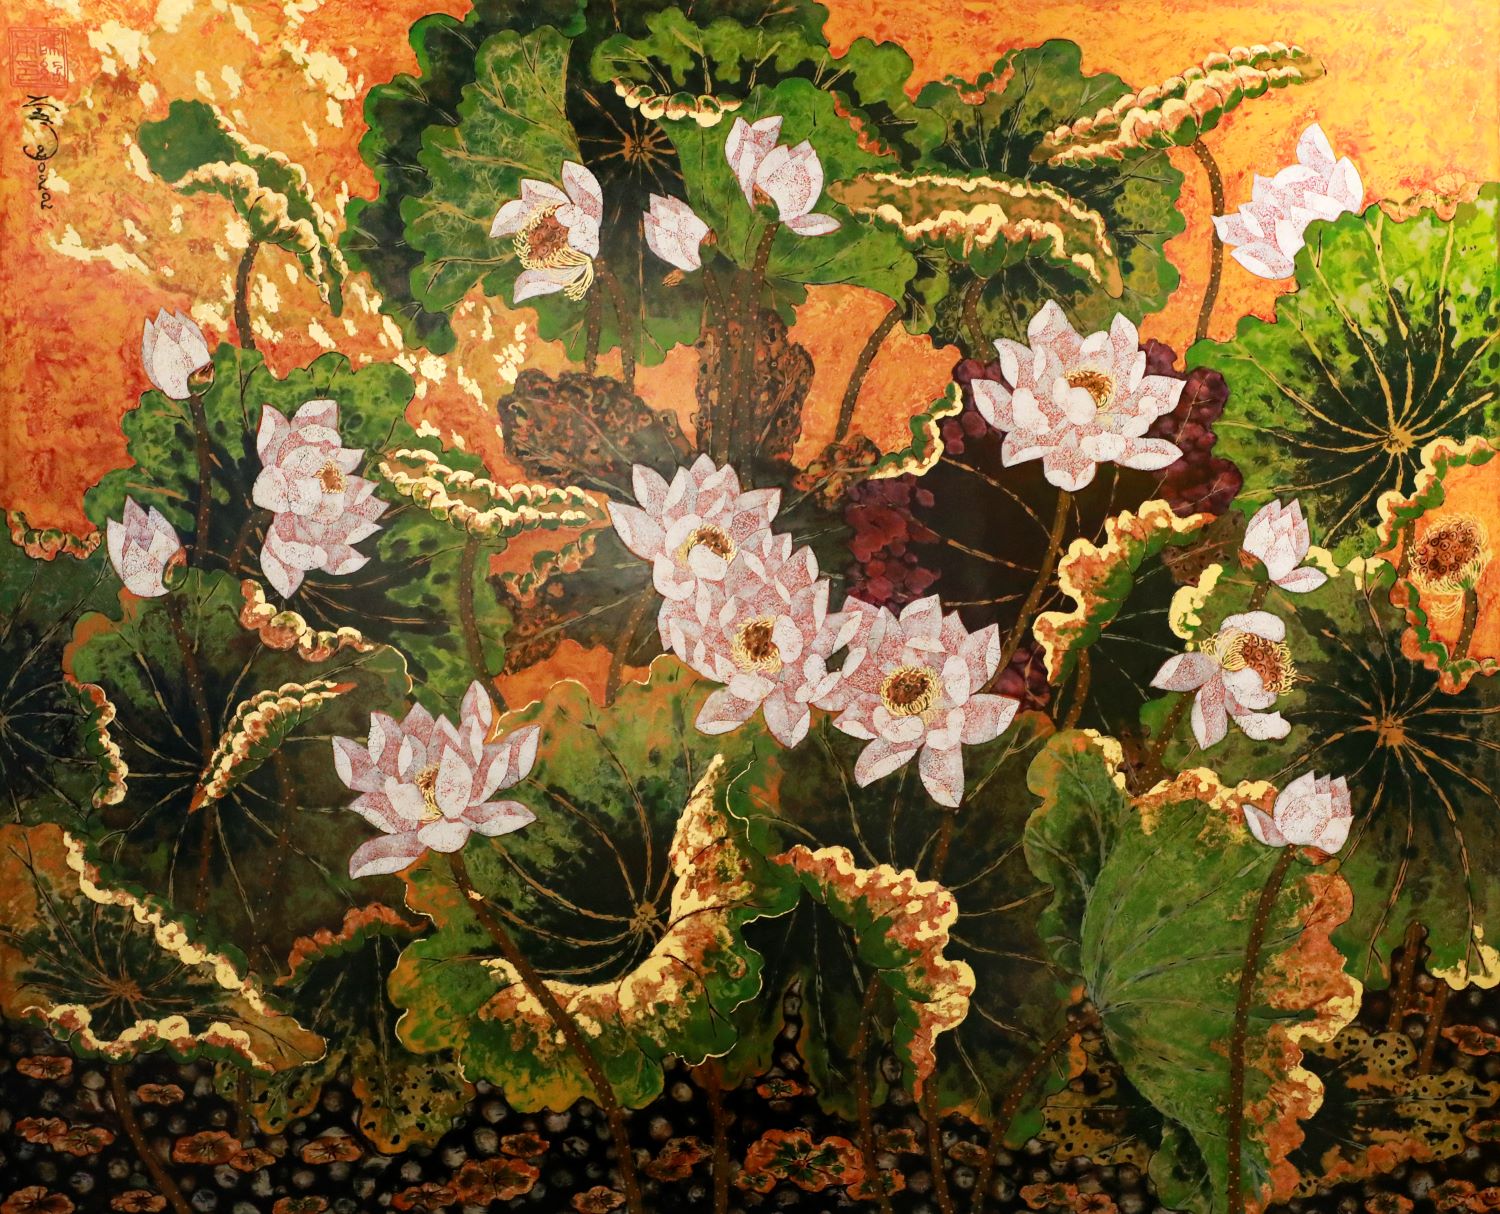 Lotus at Dawn I - Vietnamese Lacquer Painting by Artist Tran Thieu Nam